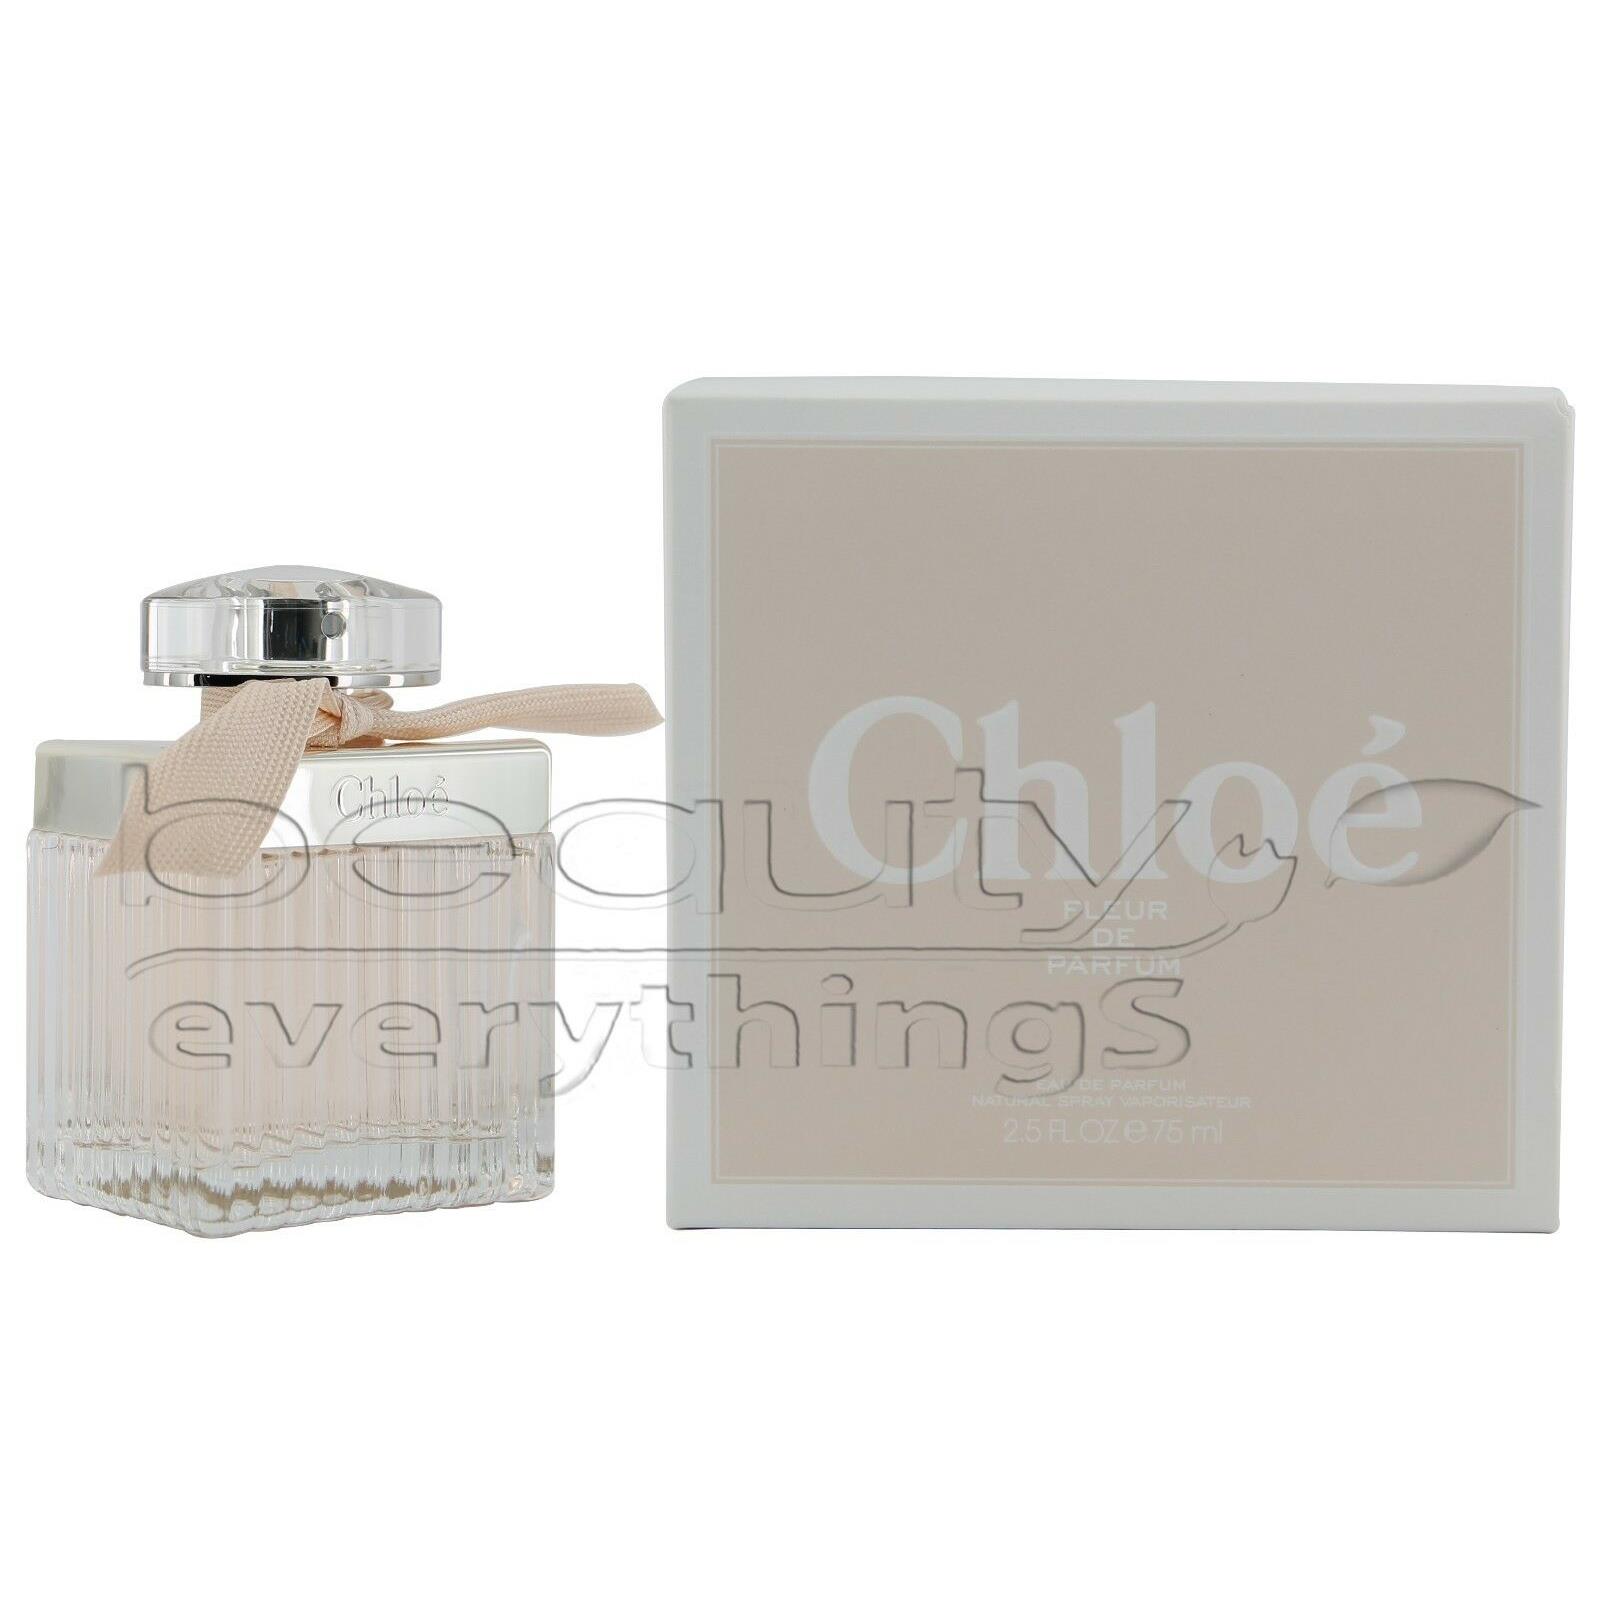 Chloé Chloe Fleur De Parfum 2.5oz /75ml Eau De Parfum Spray Women`s Perfume